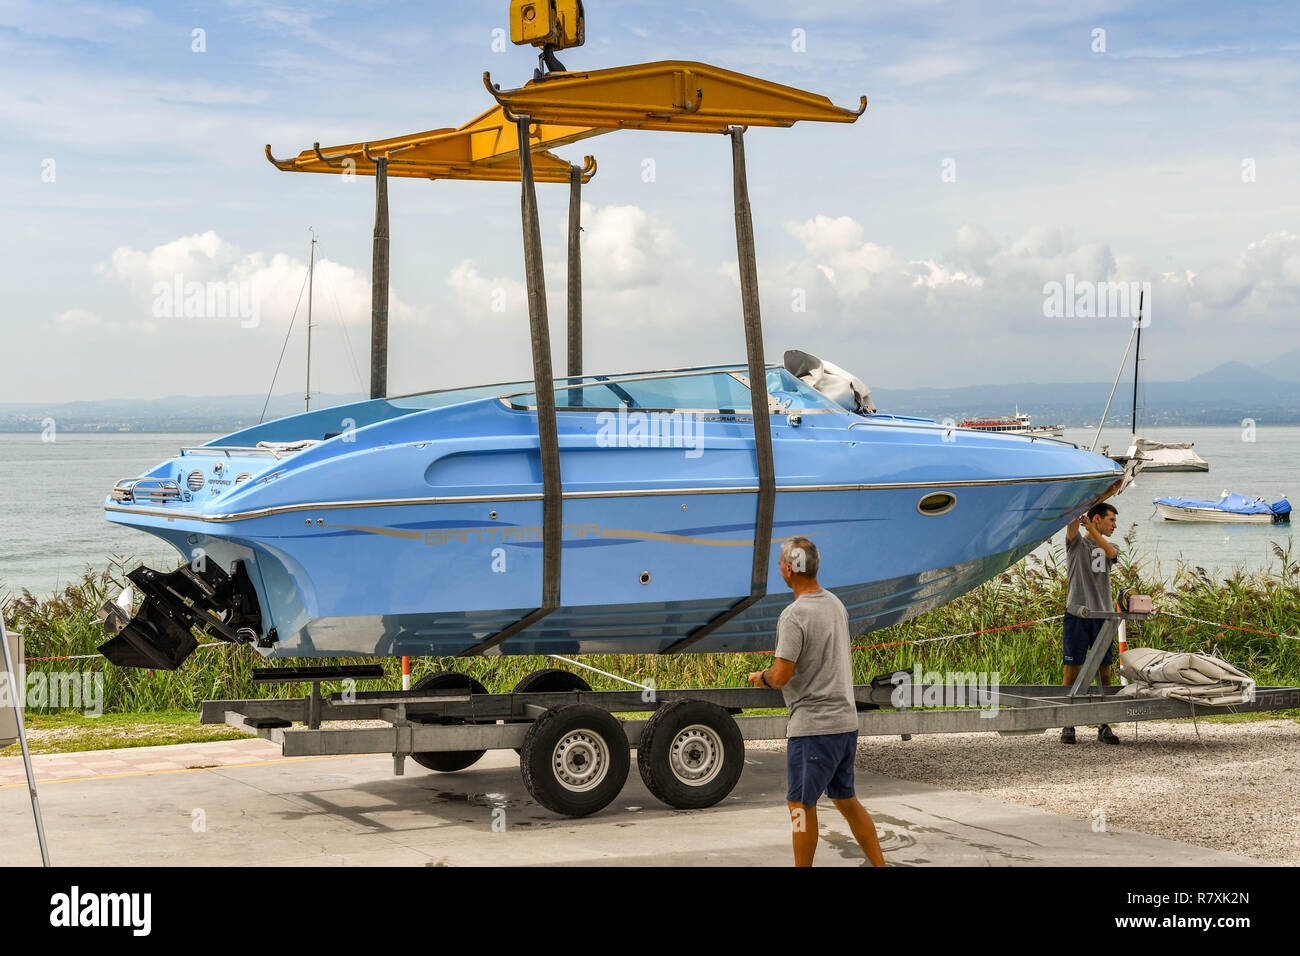 BARDOLINO, LAKE GARDA, ITALY - SEPTEMBER 2018: Crane lifting a boat off a trailer to move it into the water at a marina on Lake Garda near Bardolino. Stock Photo